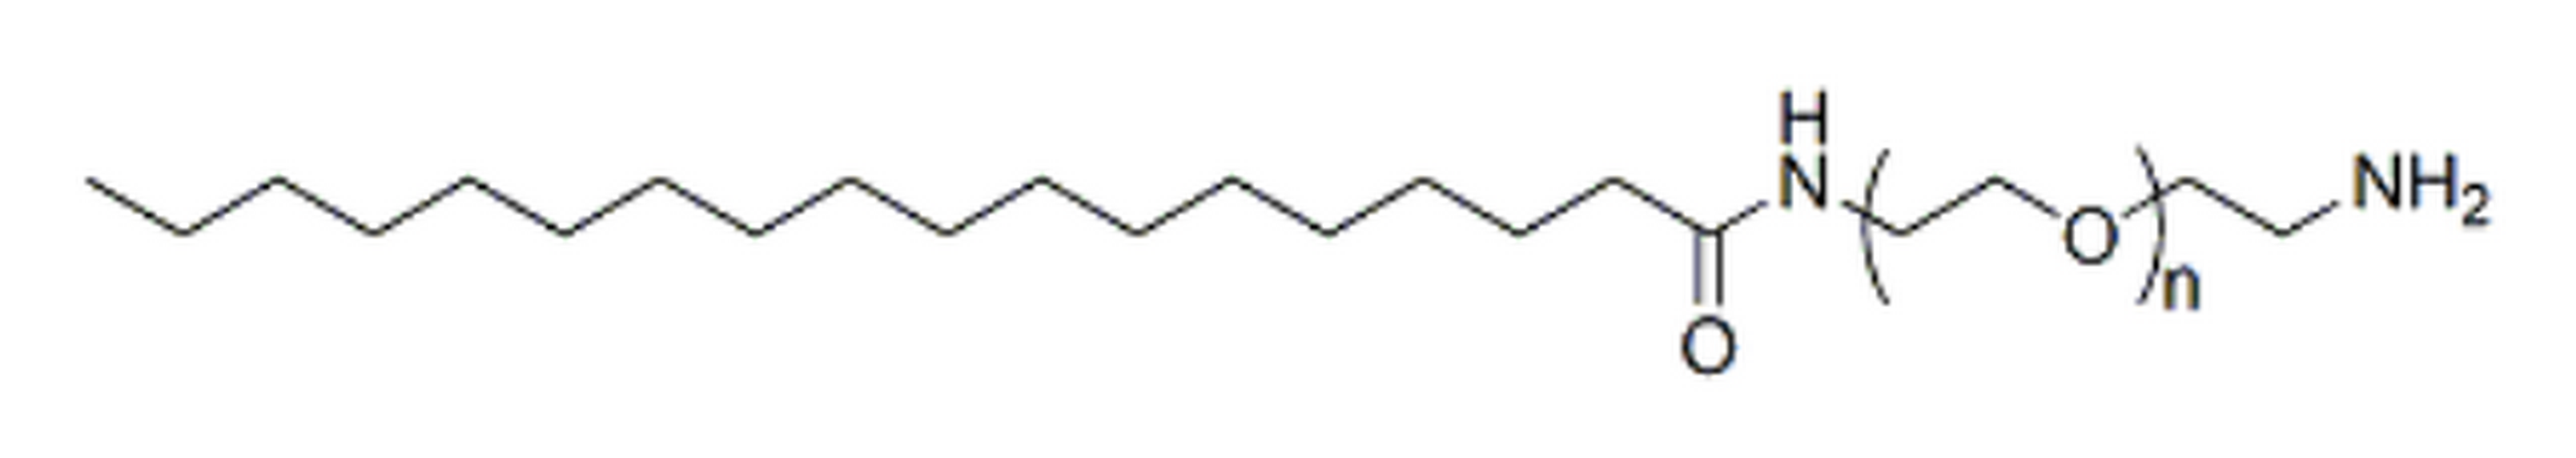 Stearic acid-PEG-amine, MW 3.4K